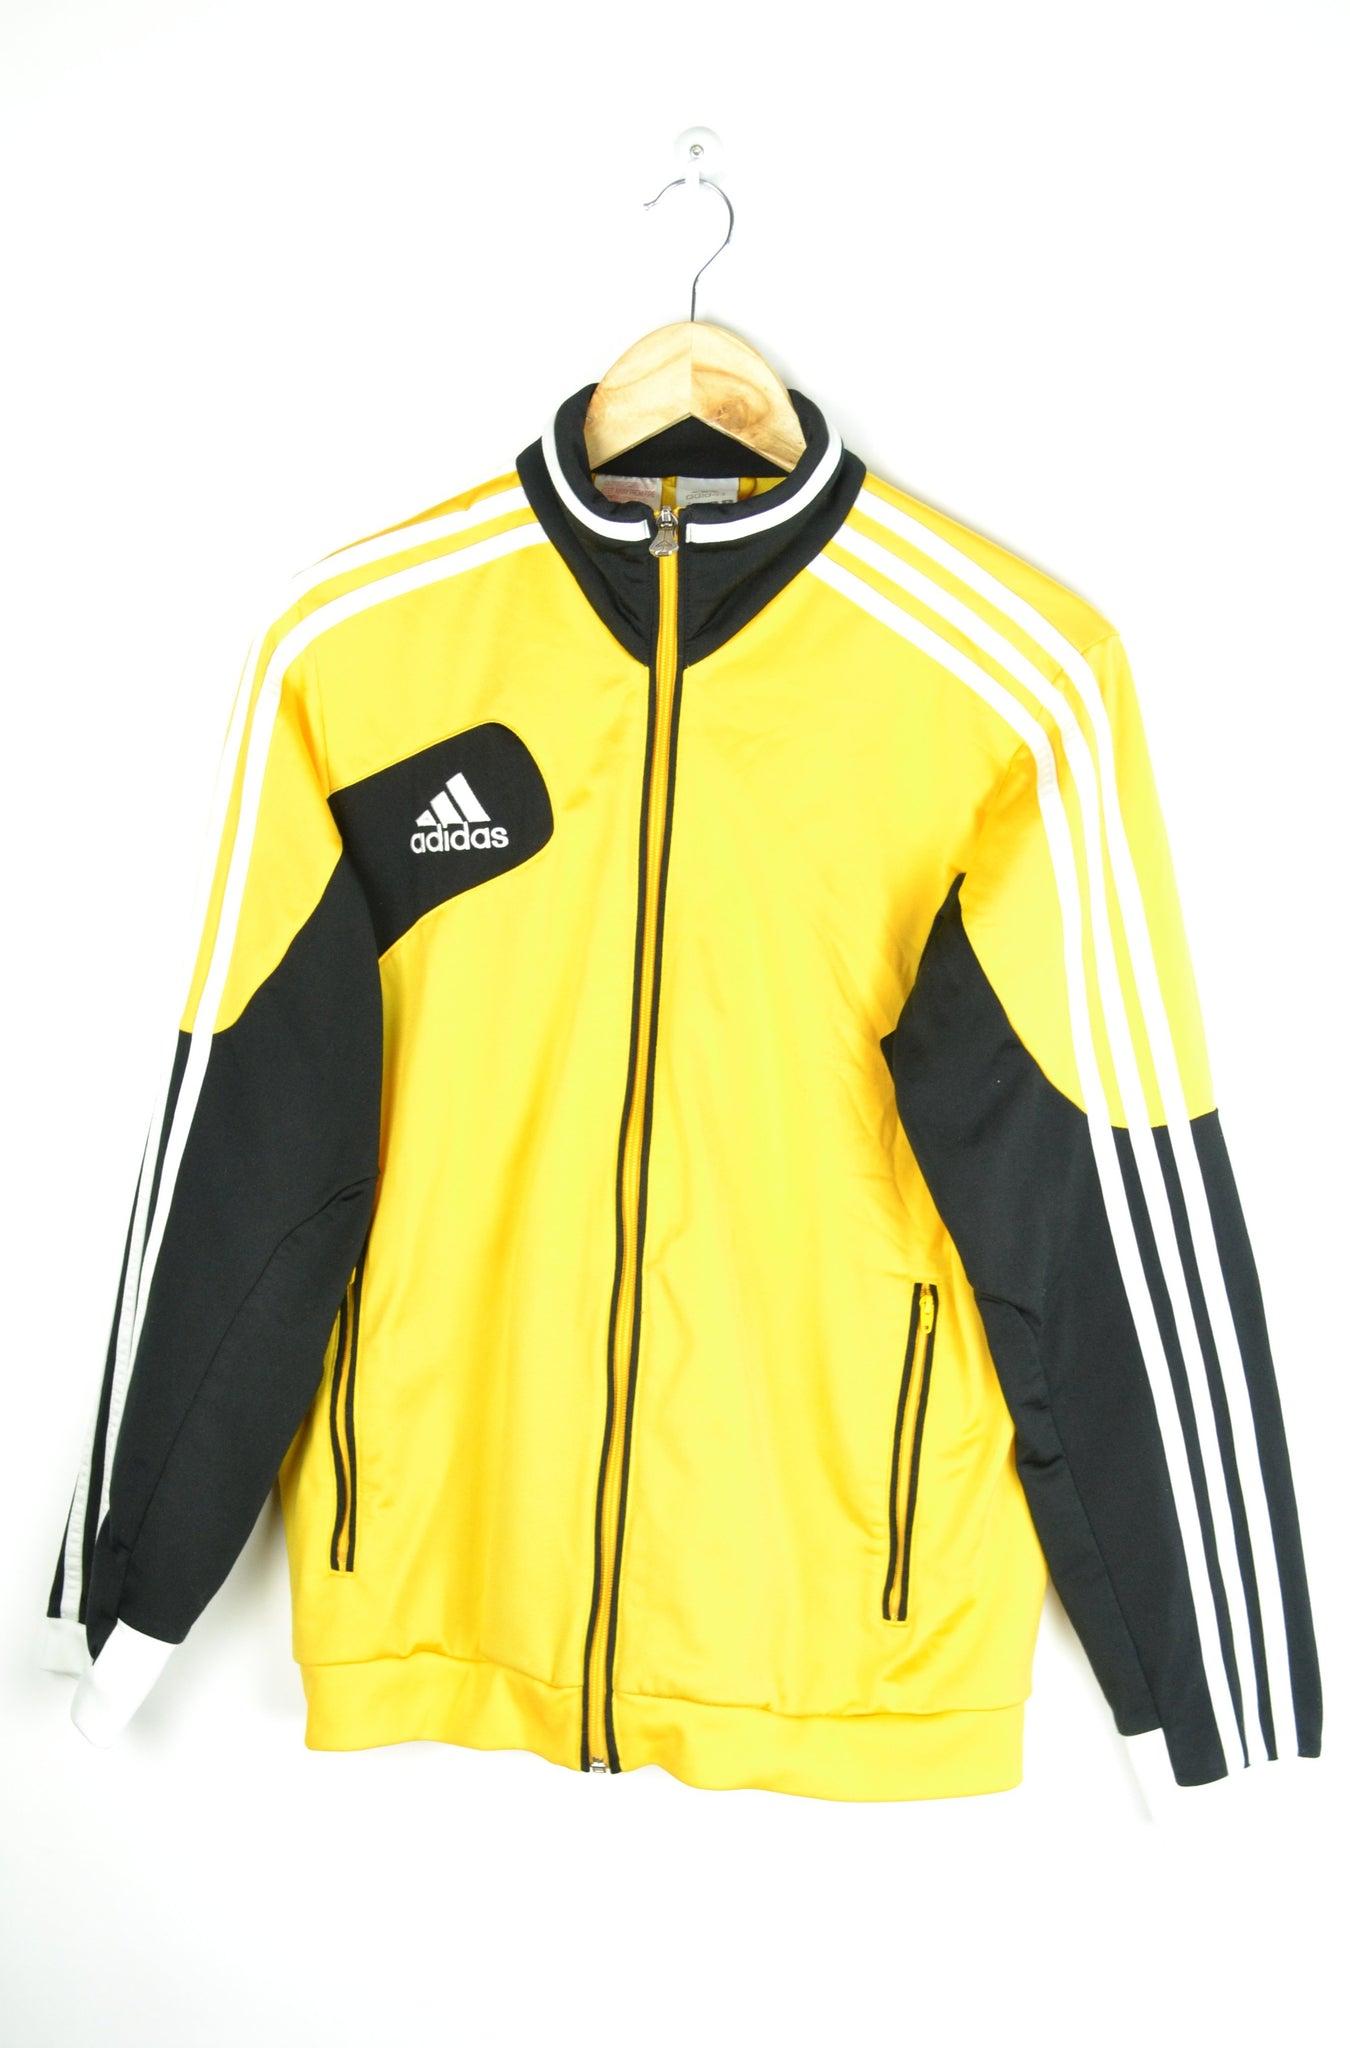 Adidas Yellow Track Jacket Small S 